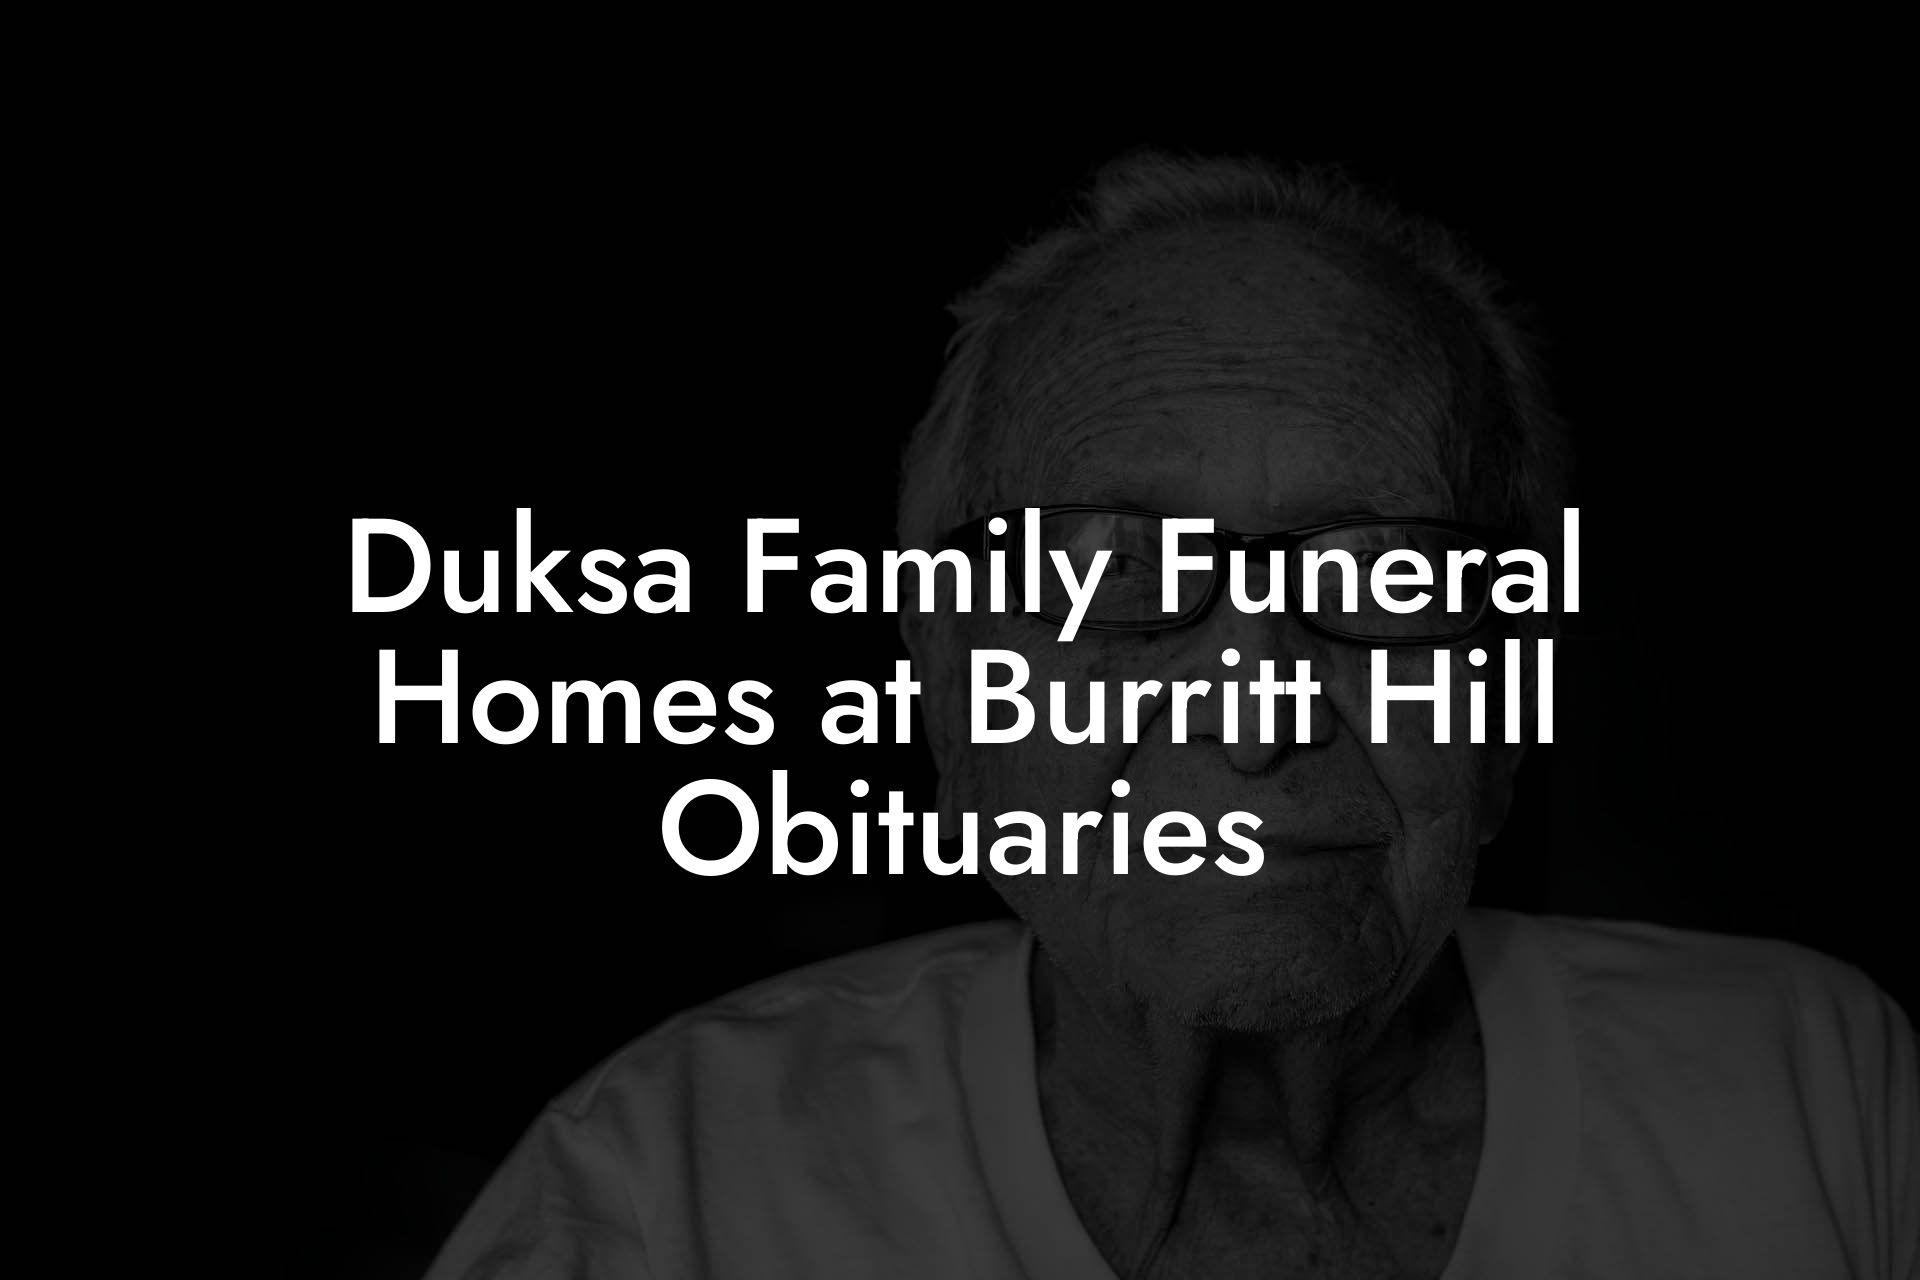 Duksa Family Funeral Homes at Burritt Hill Obituaries